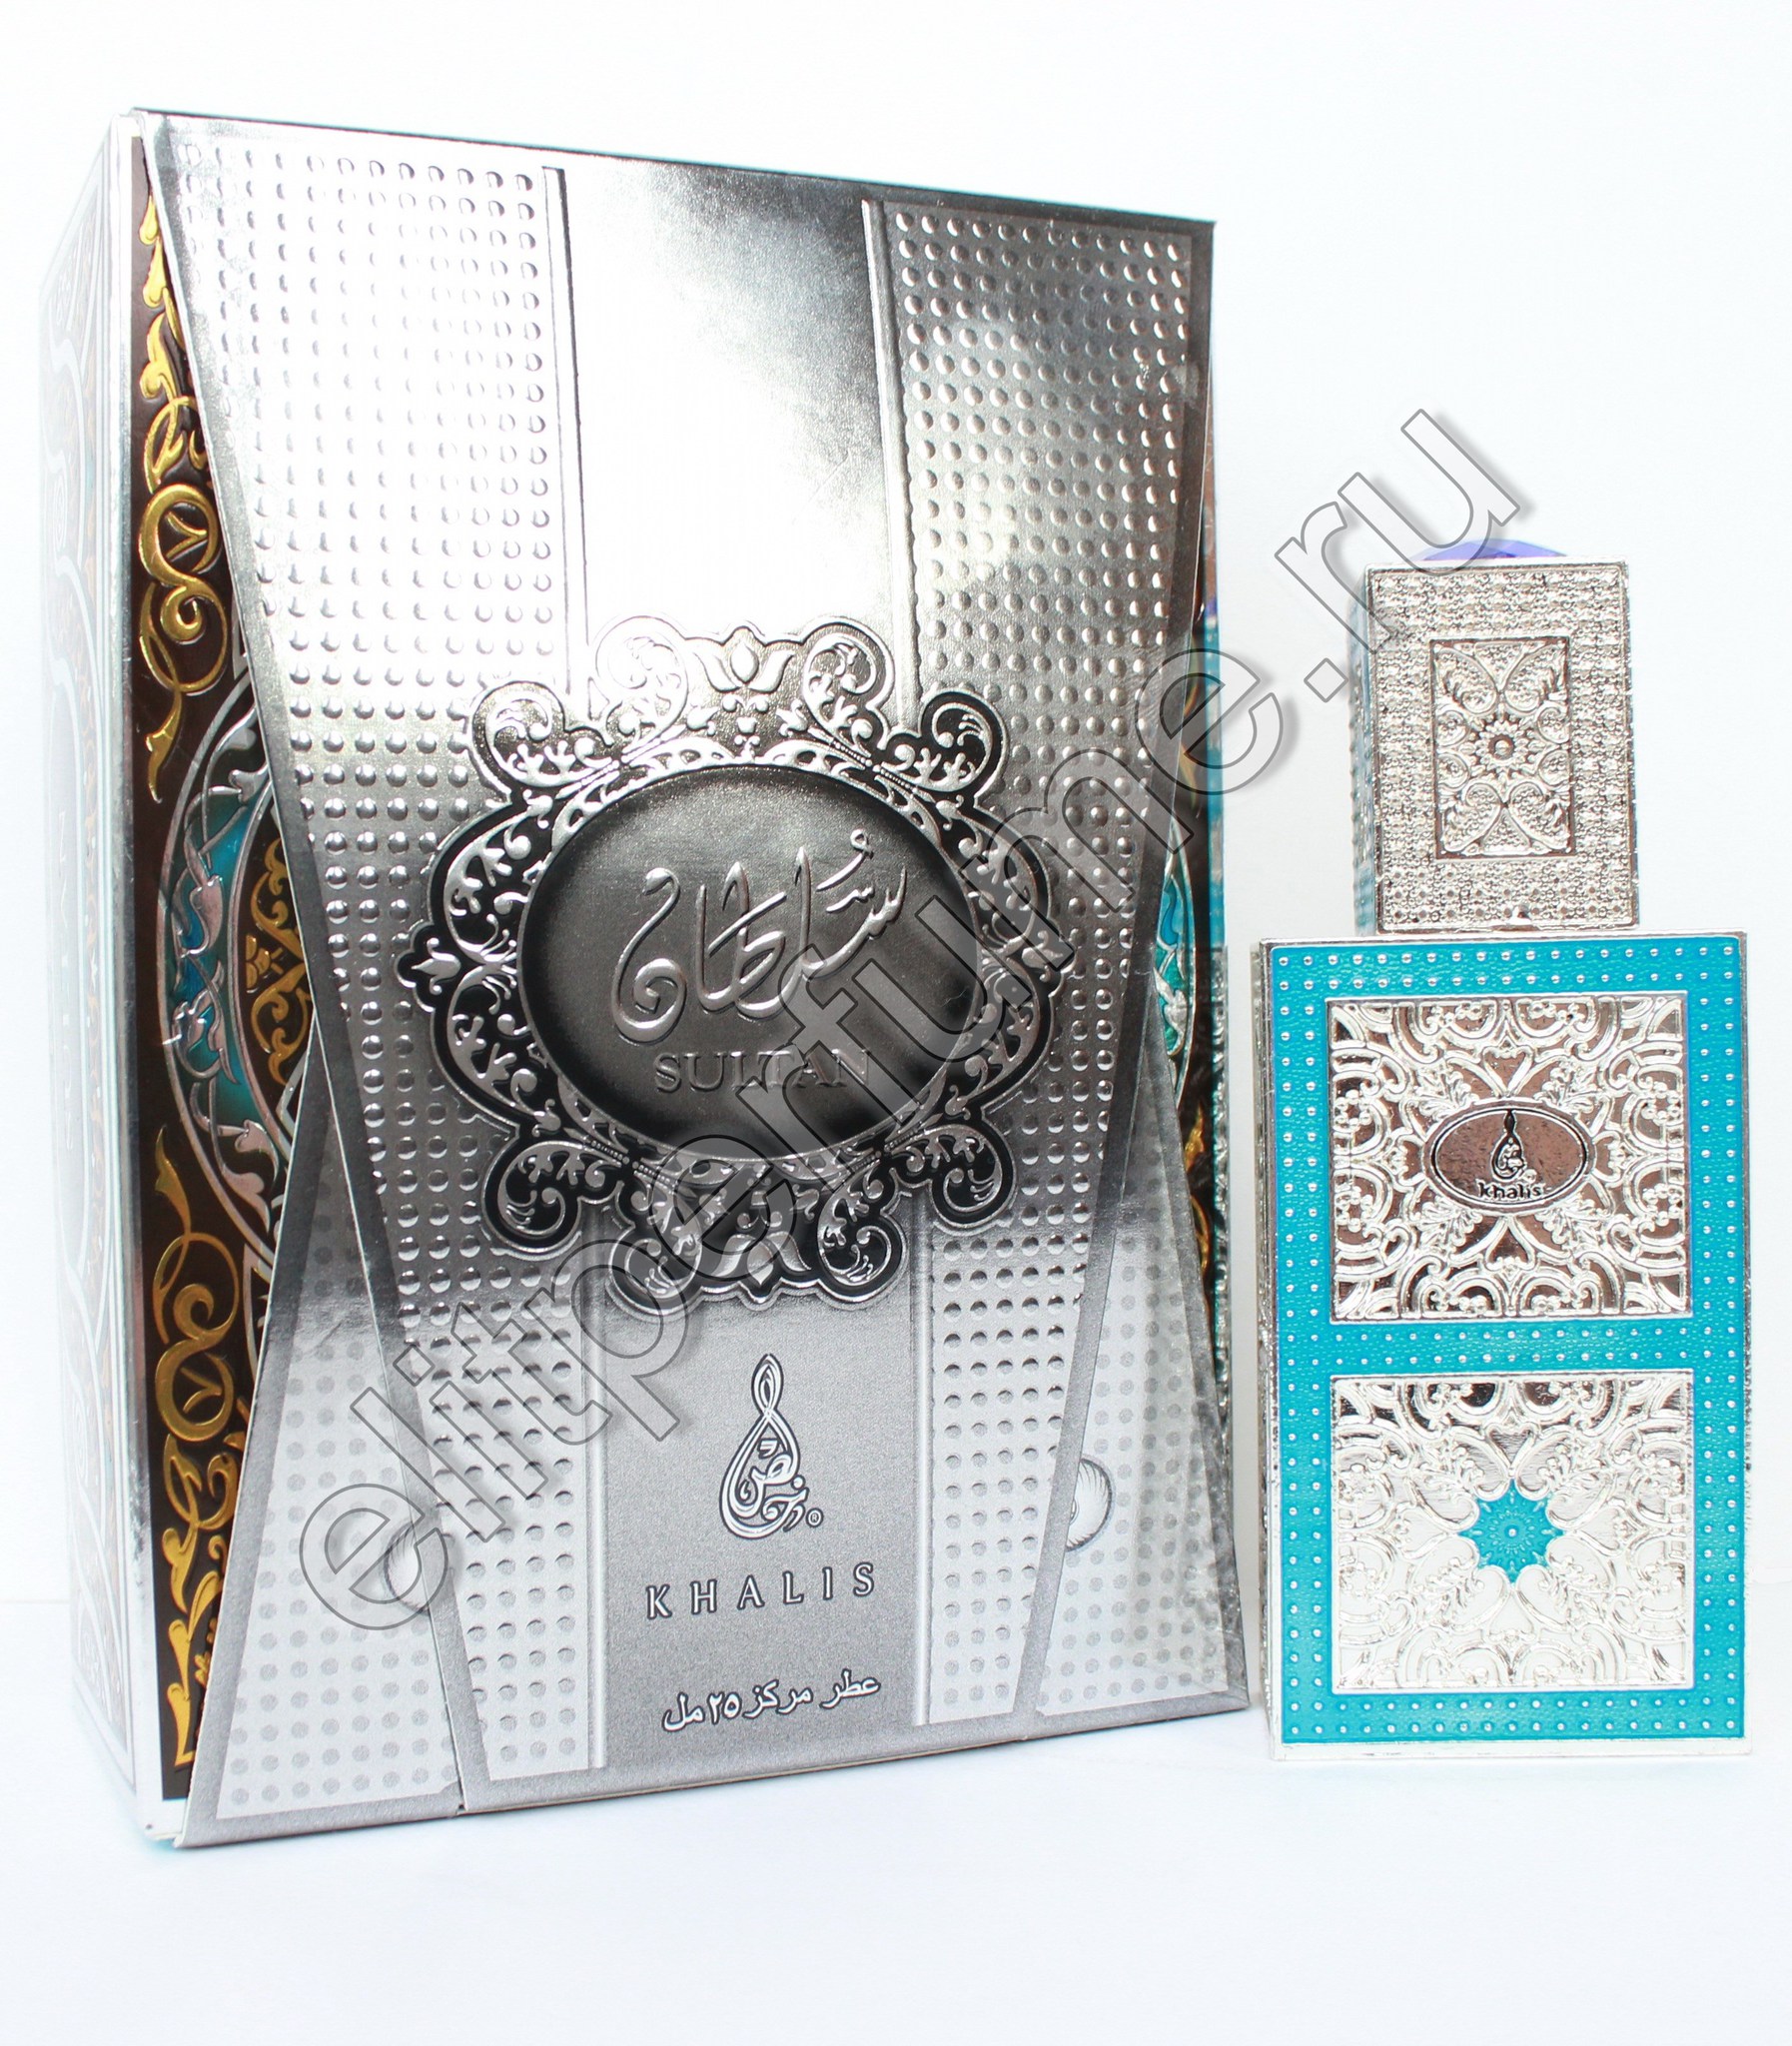 Пробник для Sultan Султан Халис 1 мл арабские масляные духи от Халис Khalis Perfumes